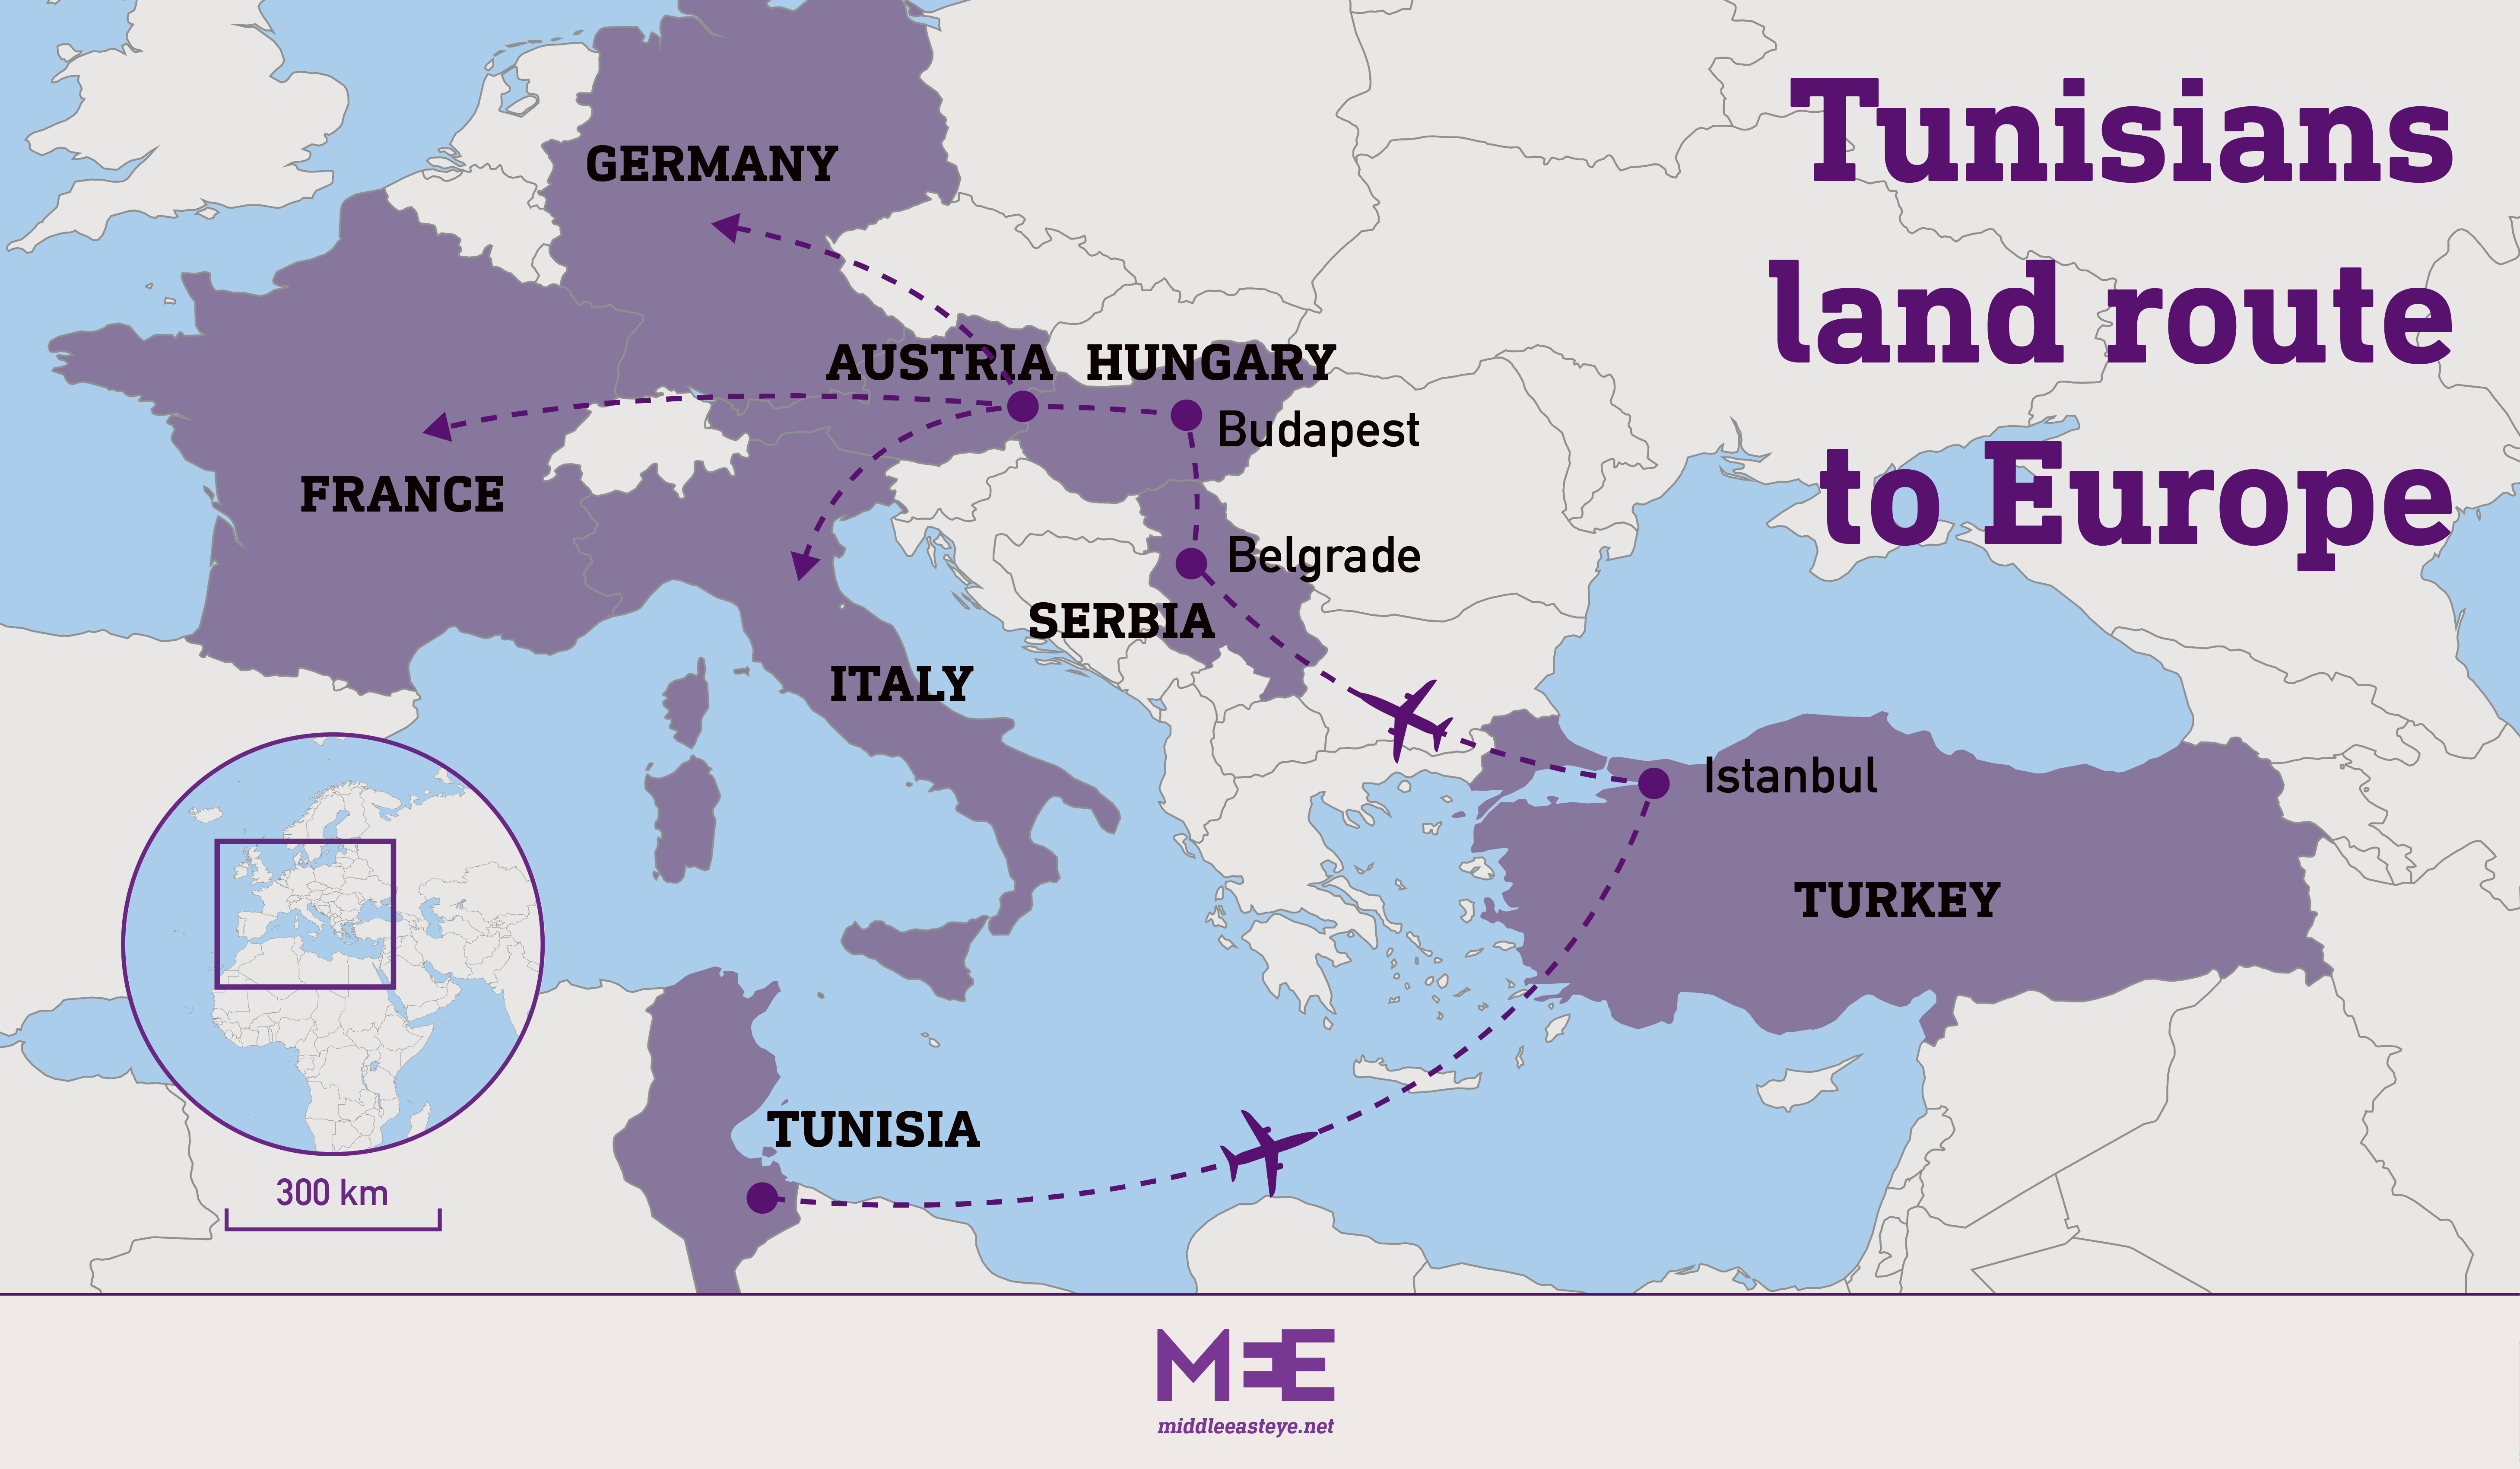 Tunisia: Balkan route (MEE)